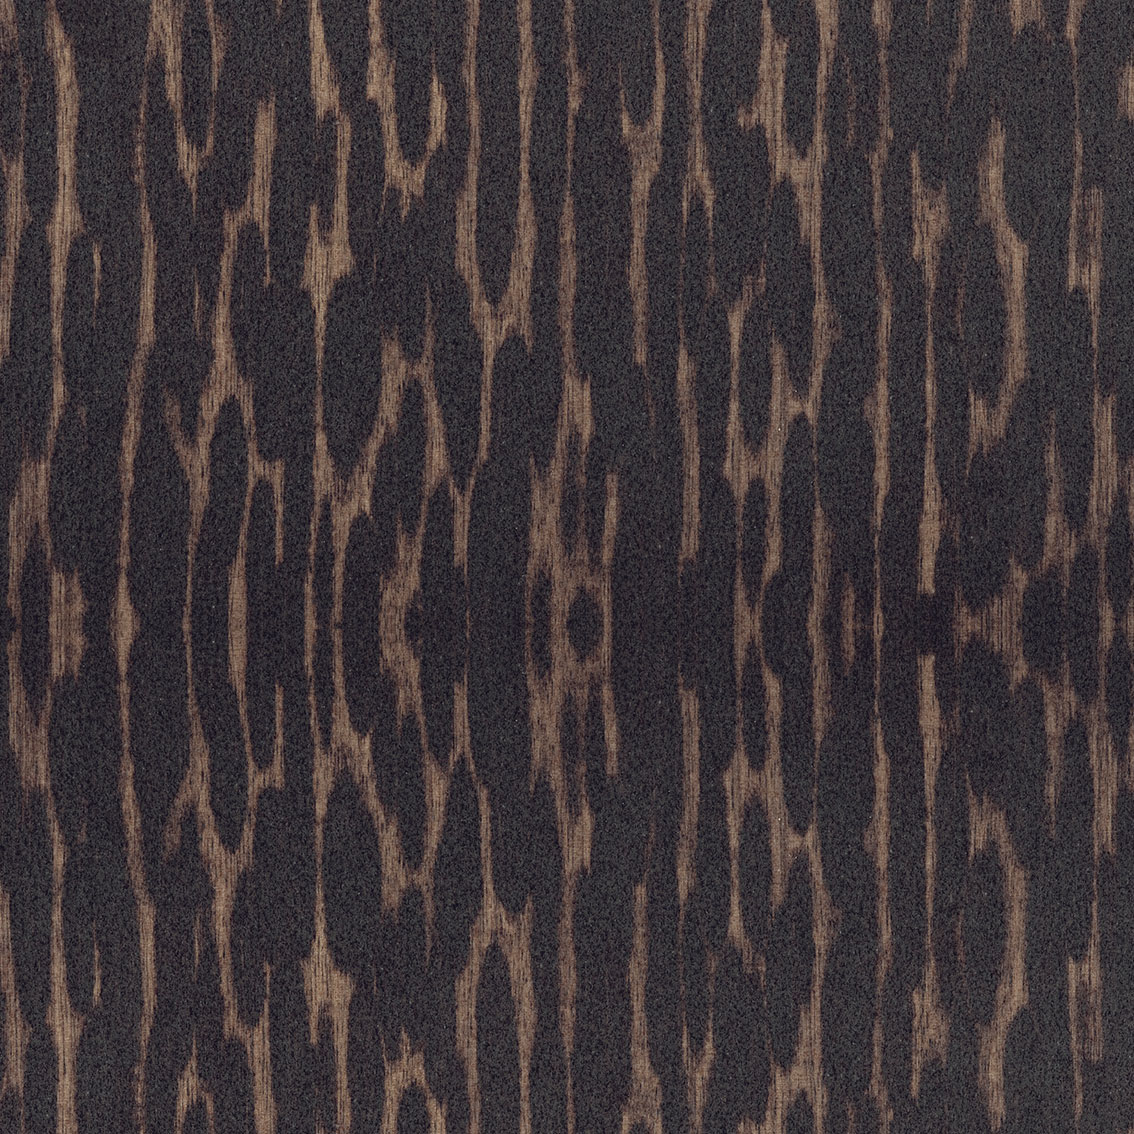 Panel Walnut with shade #412 - Gouged Effect | Oberflex